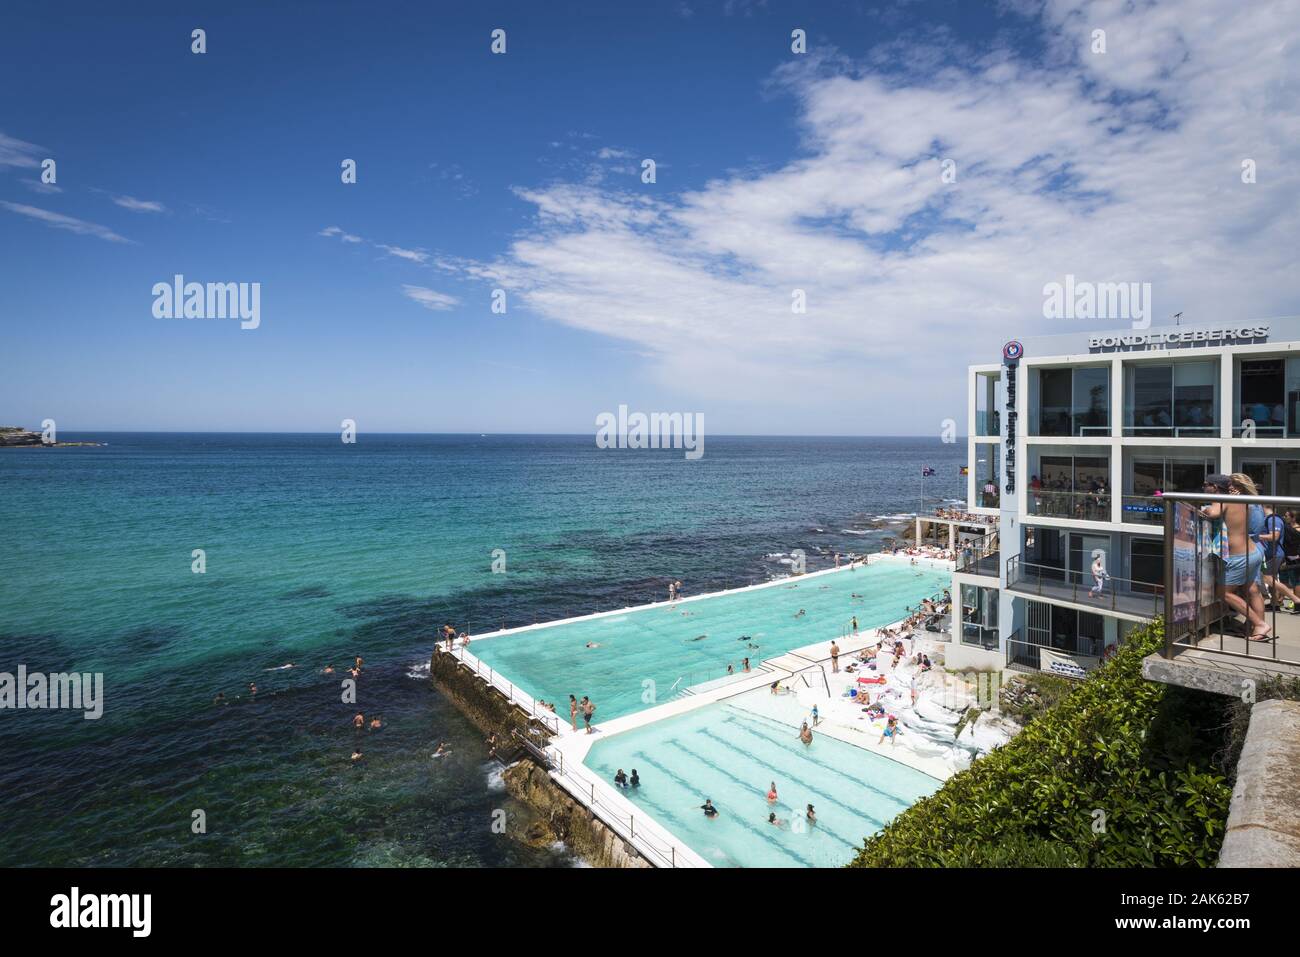 New South Wales: Sydney, Bondi Beach, Pool des Bondi Icebergs Swimming Clubs, Australien Osten | usage worldwide Stock Photo